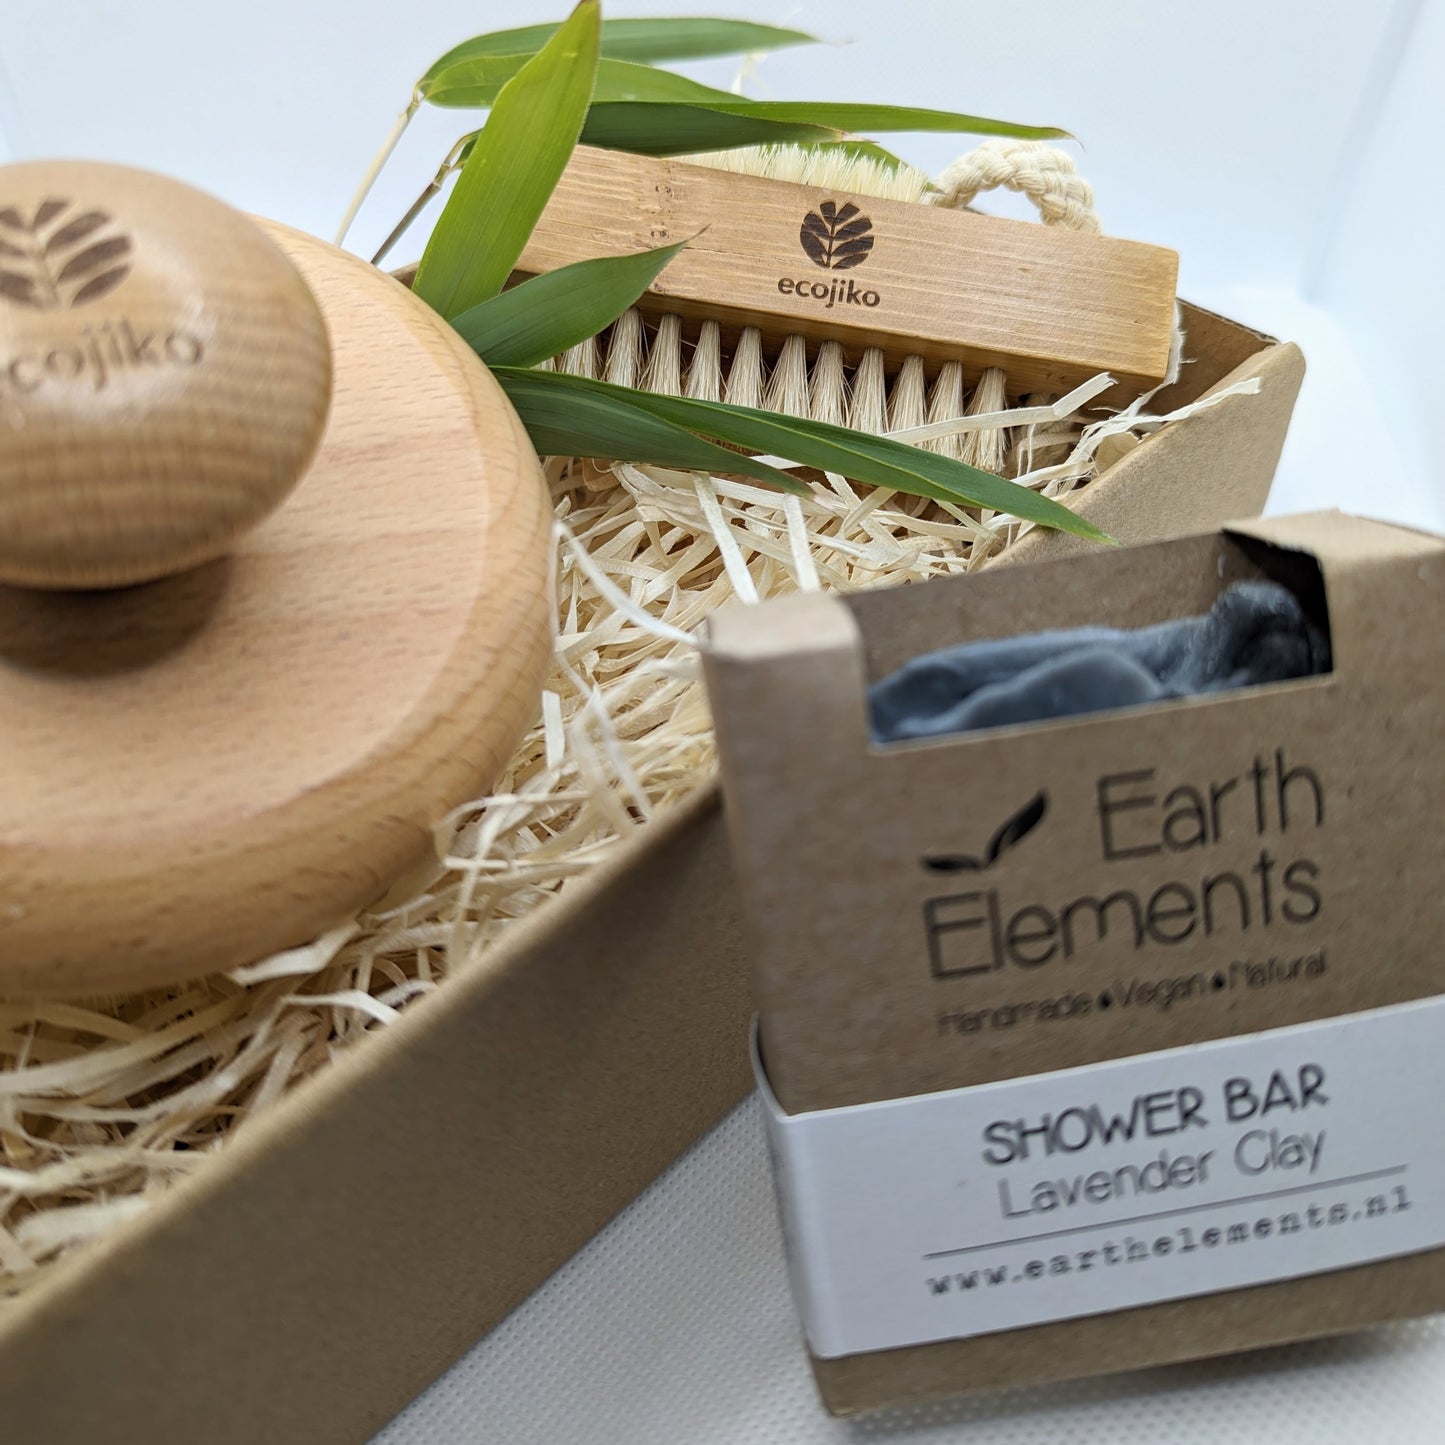 eco friendly zero waste gift box with soap body brush and nail brush